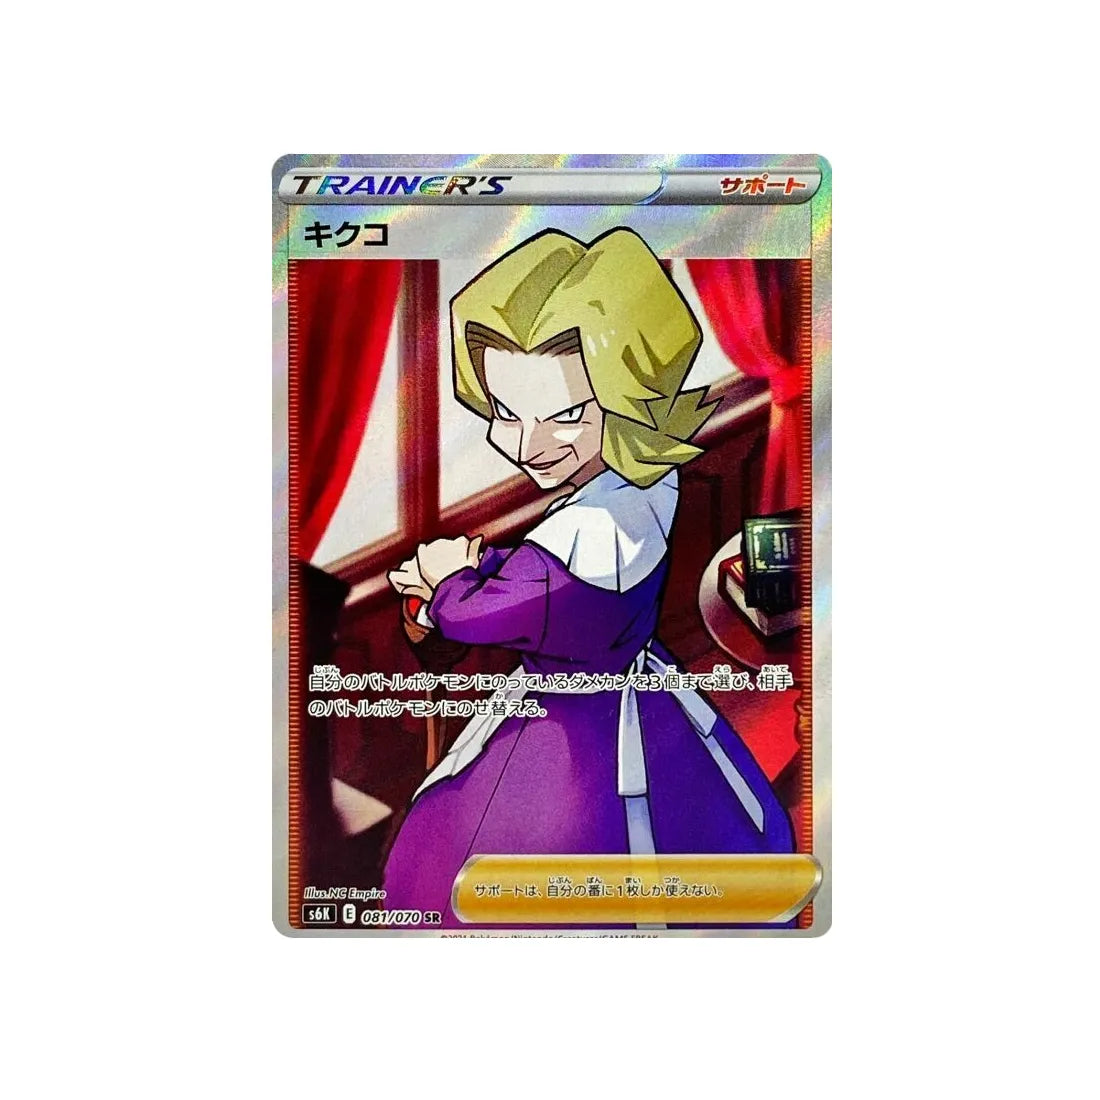 Carte Pokémon Jet Black Spirit S6K 081/070: Agatha